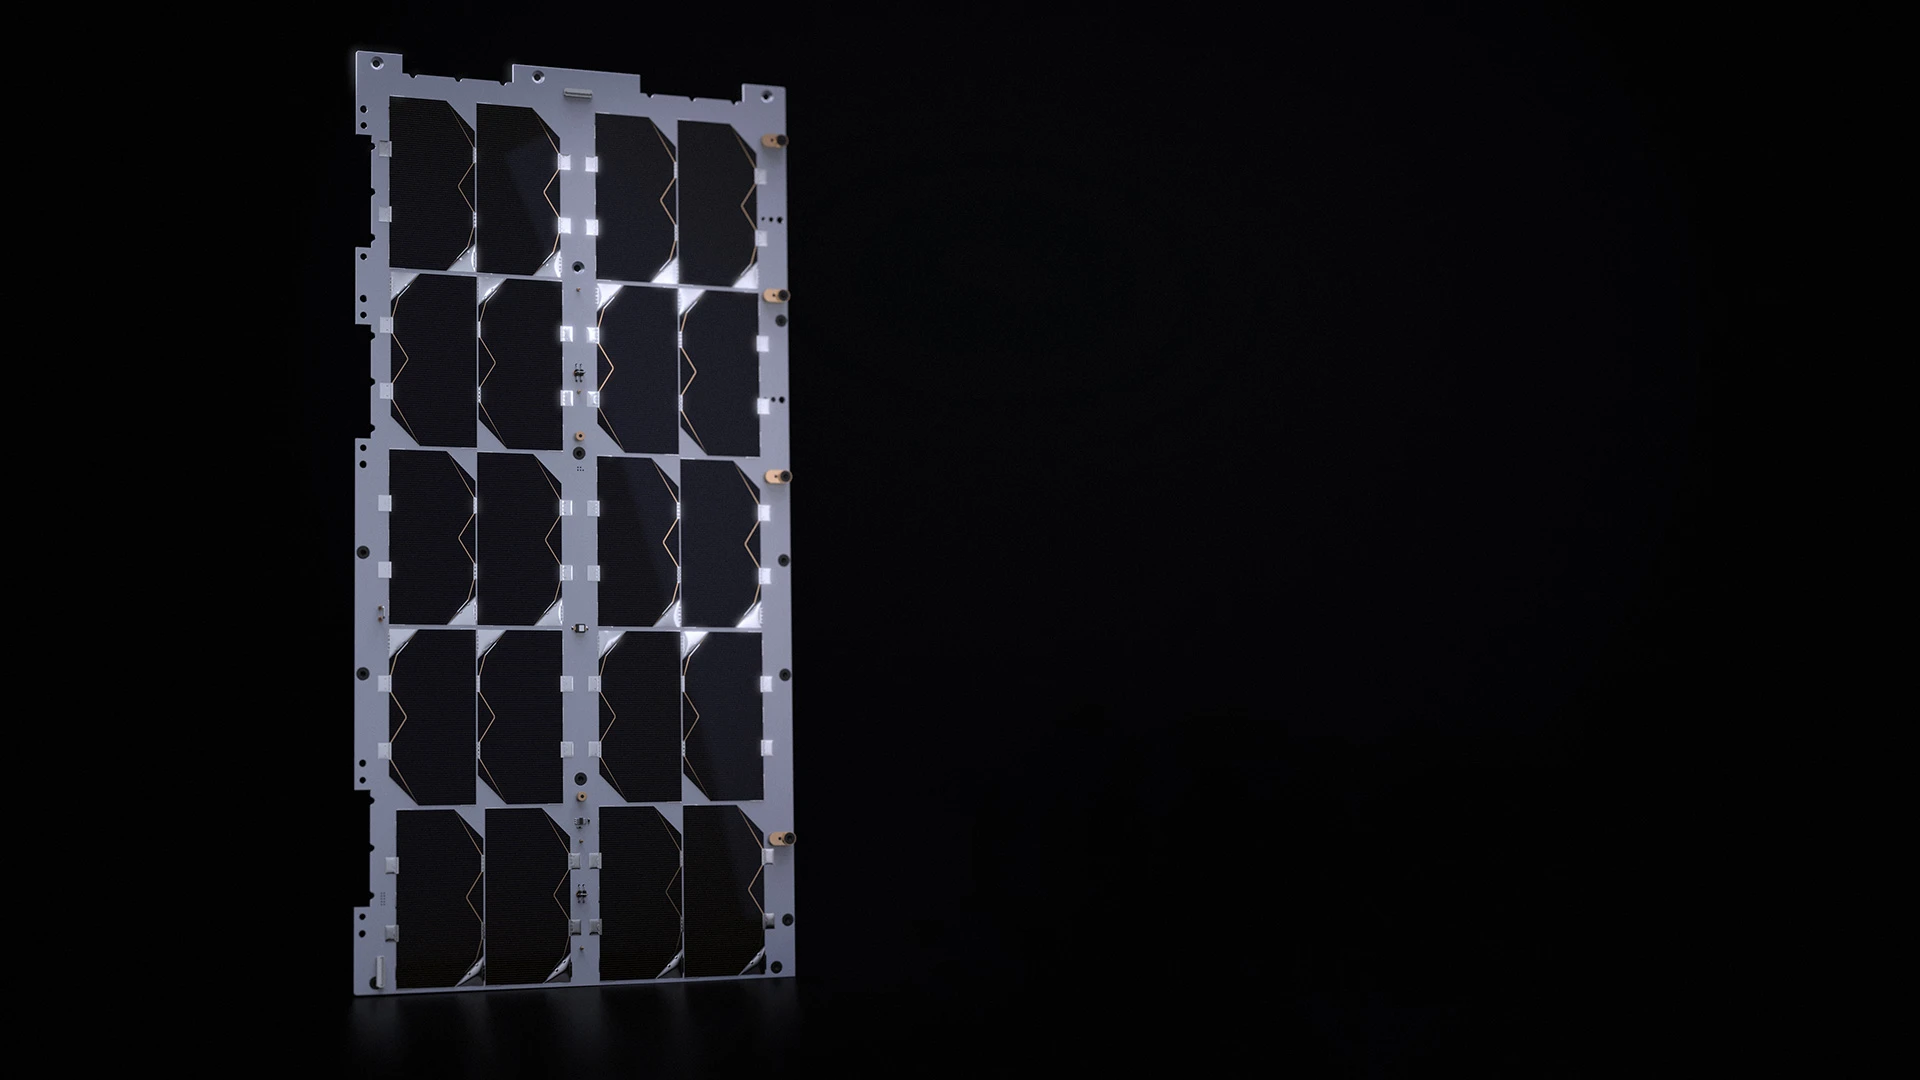 8U Solar Panel web render 4